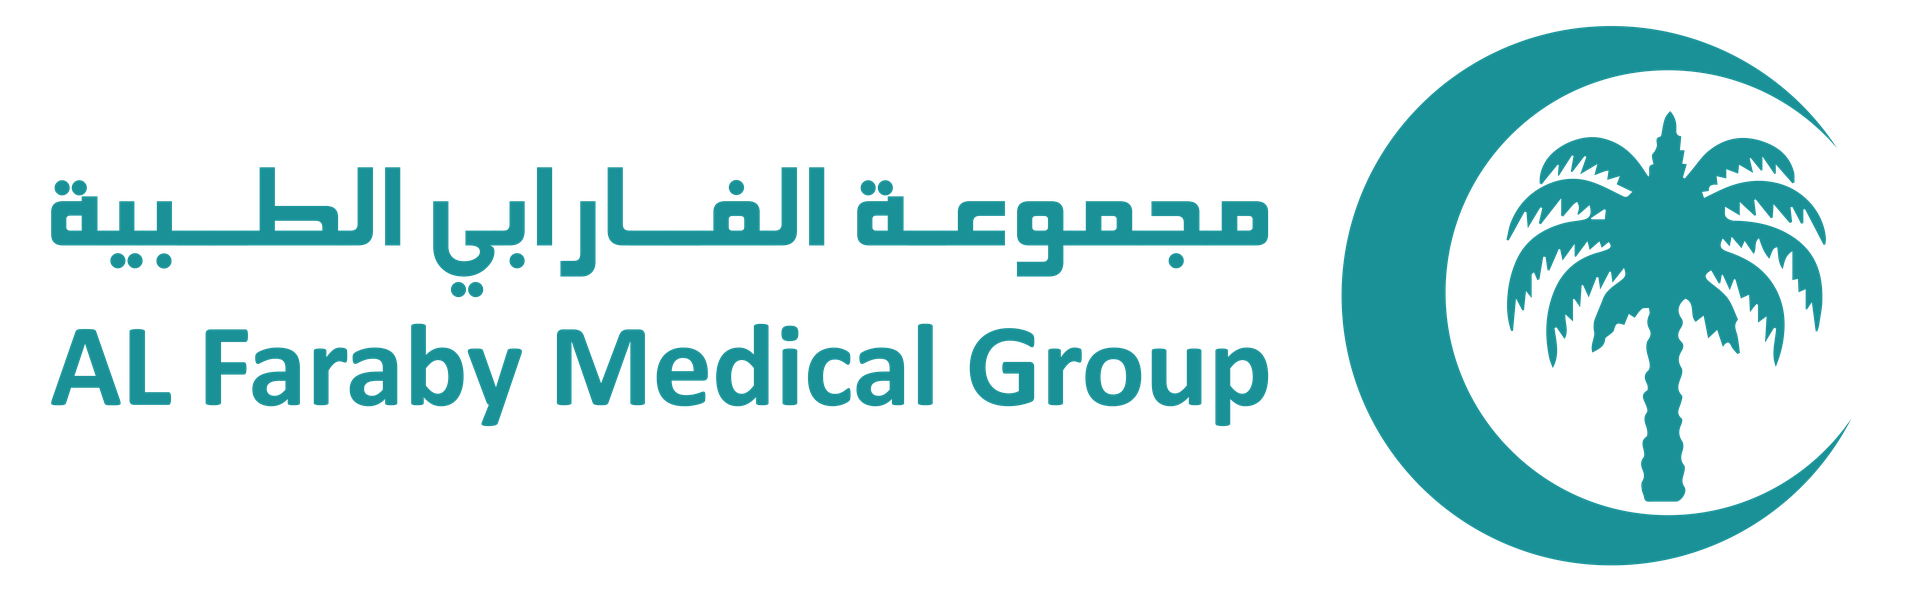 Al-Faraby Medical Group